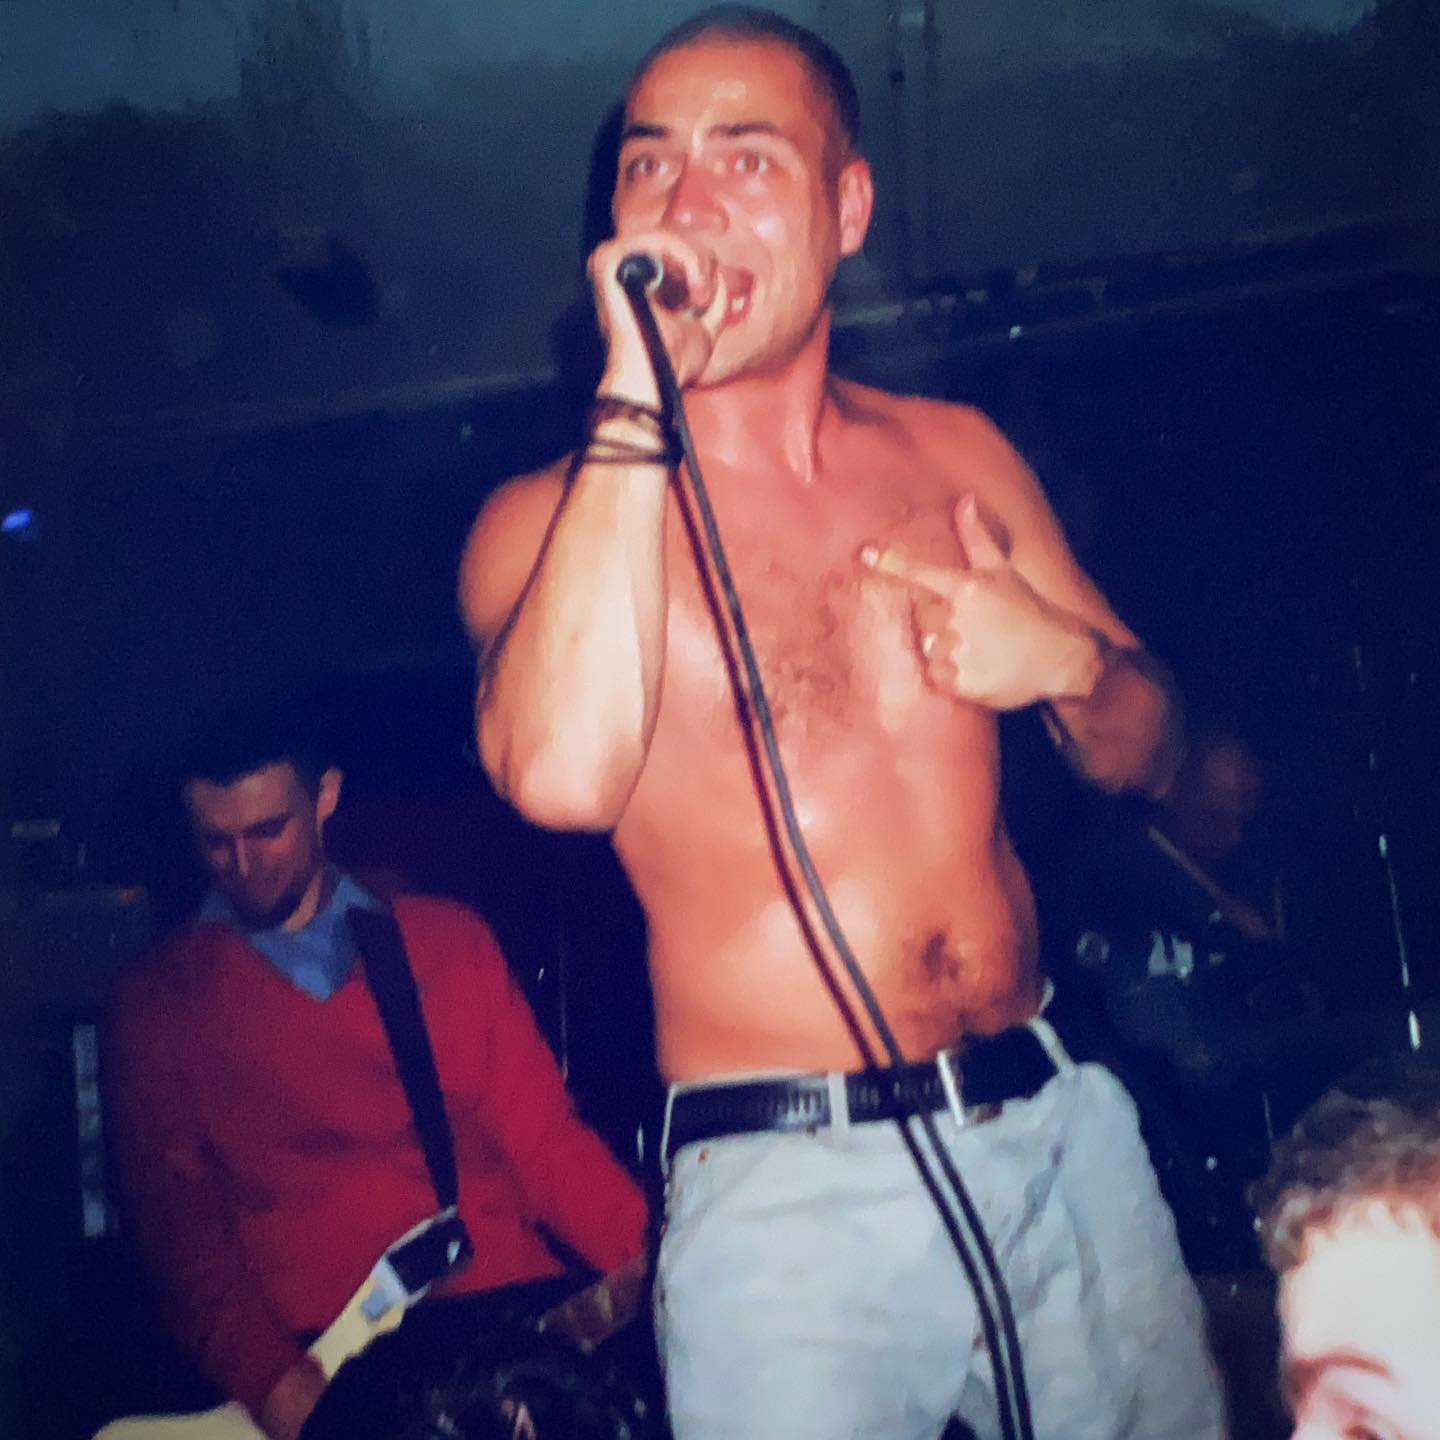 Manliftingbanner - Goudvishal, Arnhem (NL) - 23 January 1999 #straightedge #vegan #hardcore #punkrock #metal #gigpic by @twentylandcrew